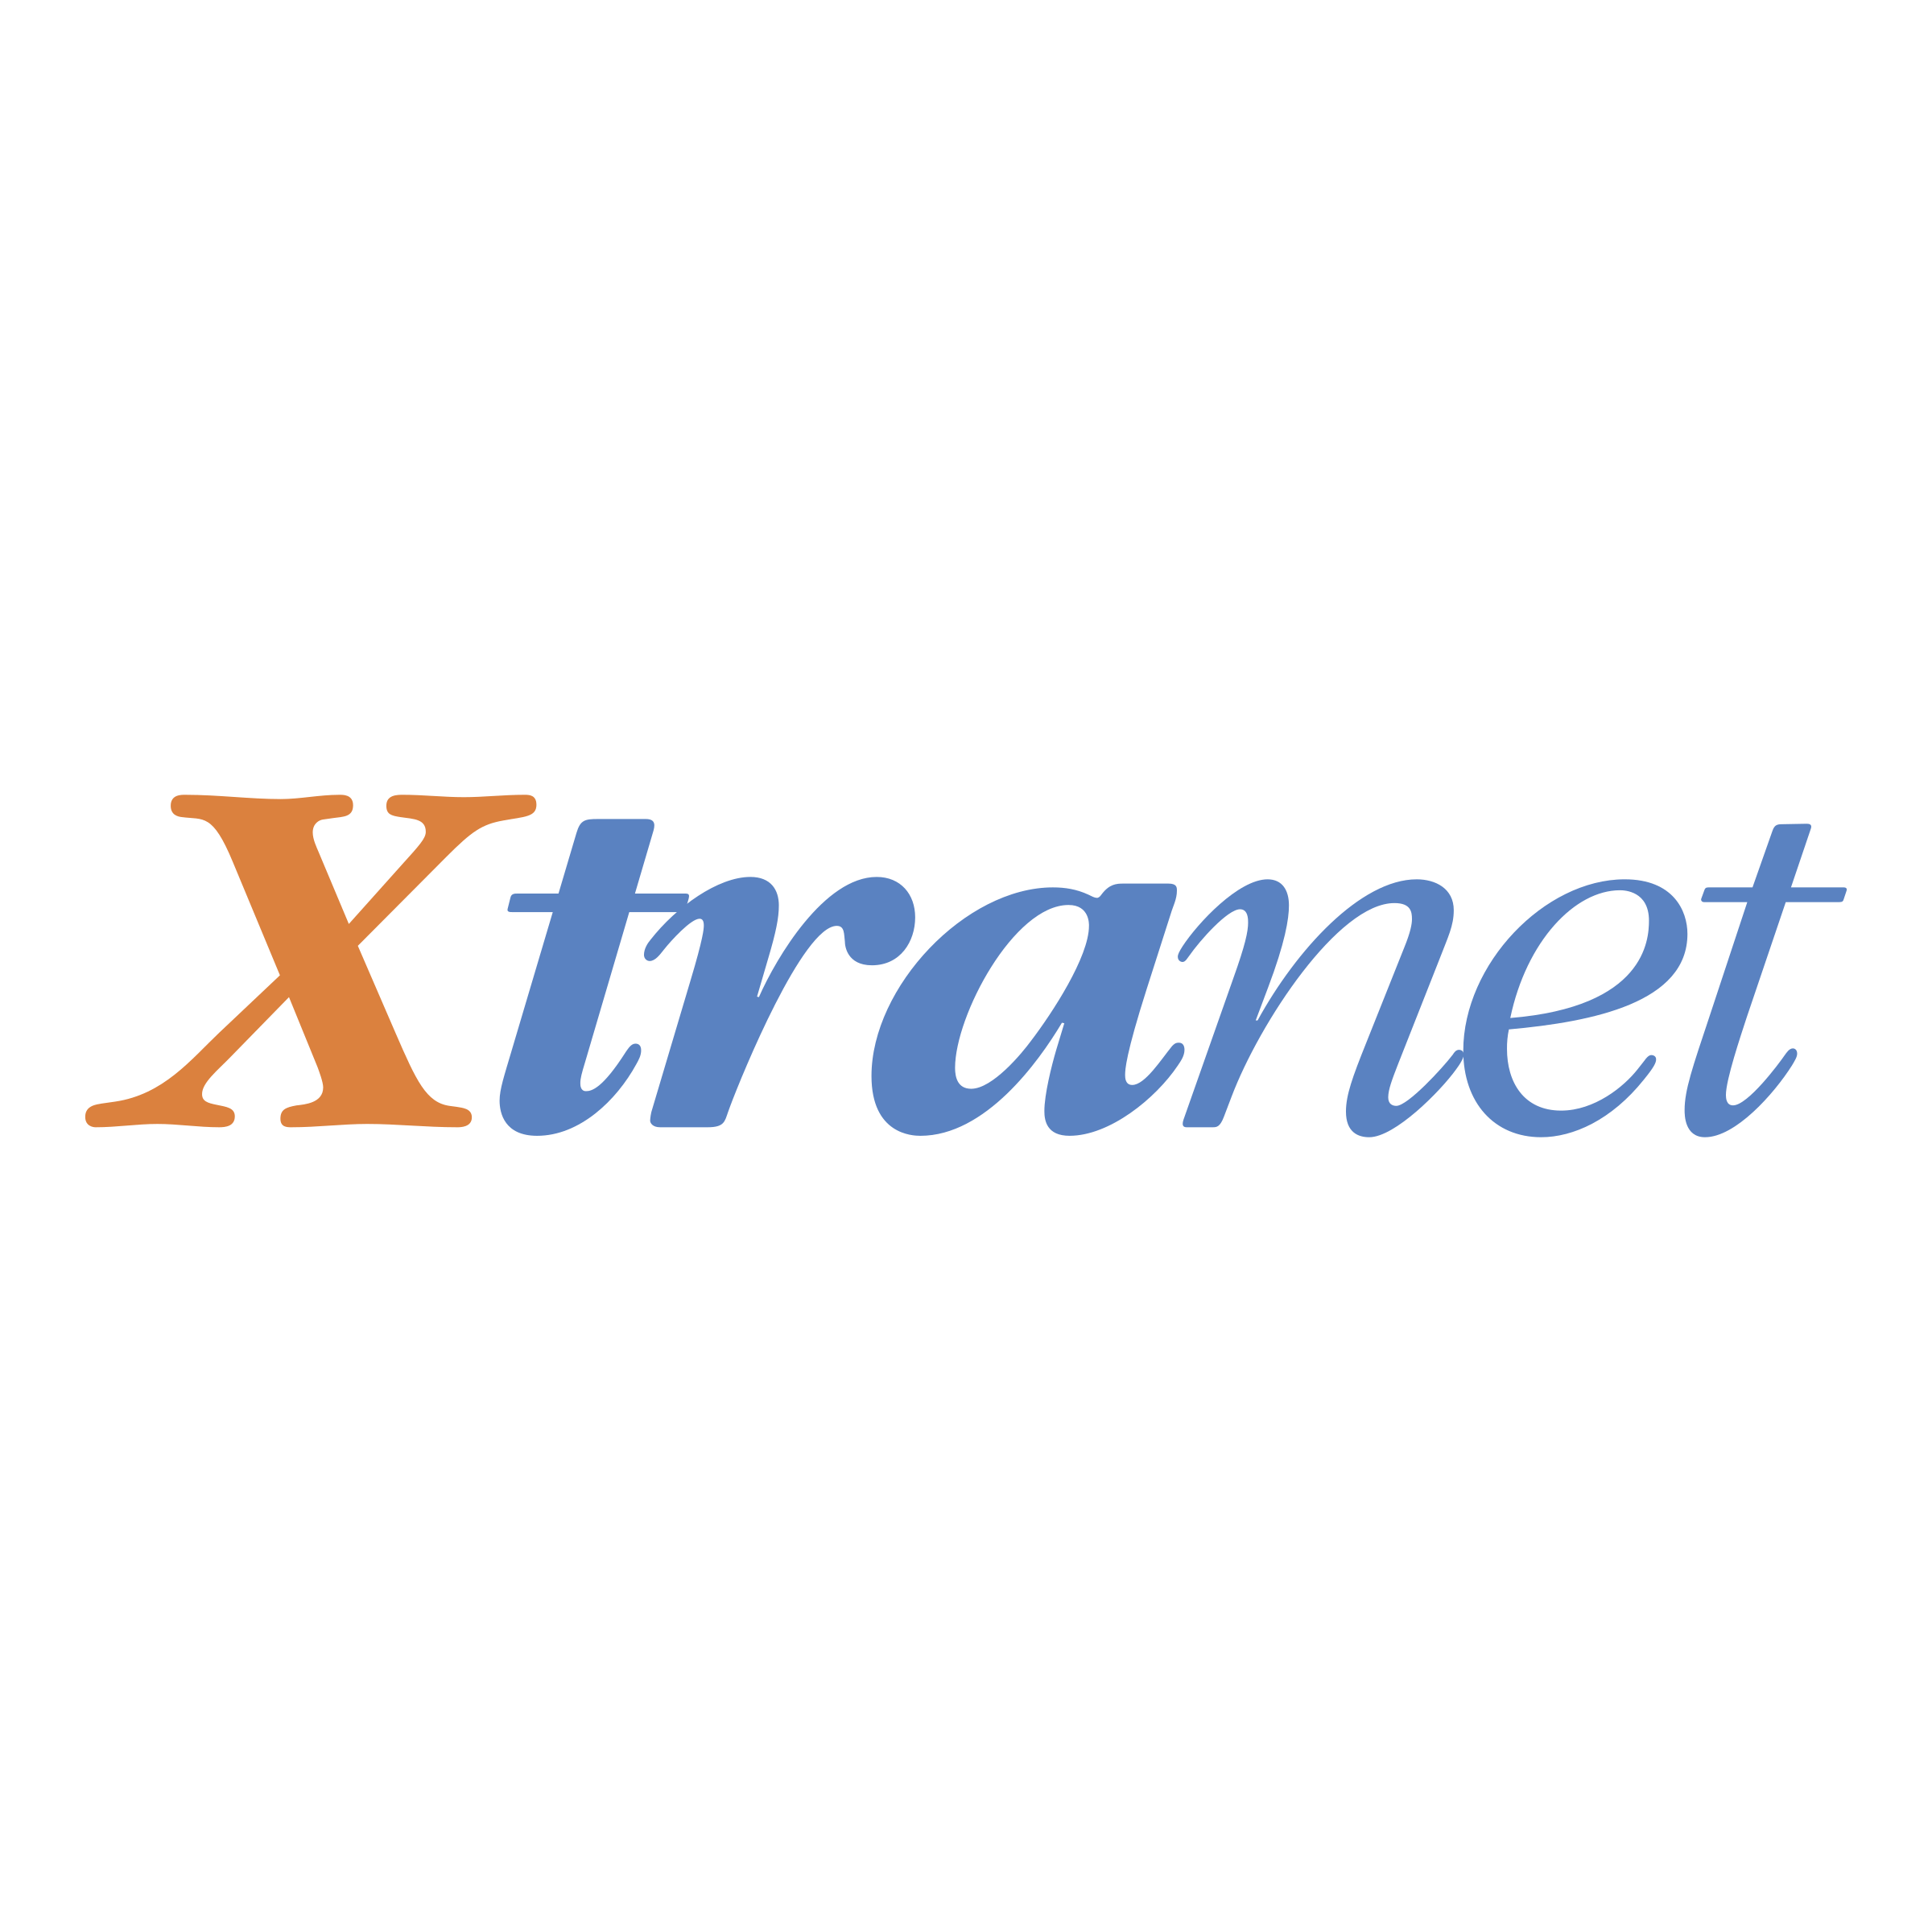 Xenova Logo - XTranet Logo PNG Transparent & SVG Vector - Freebie Supply